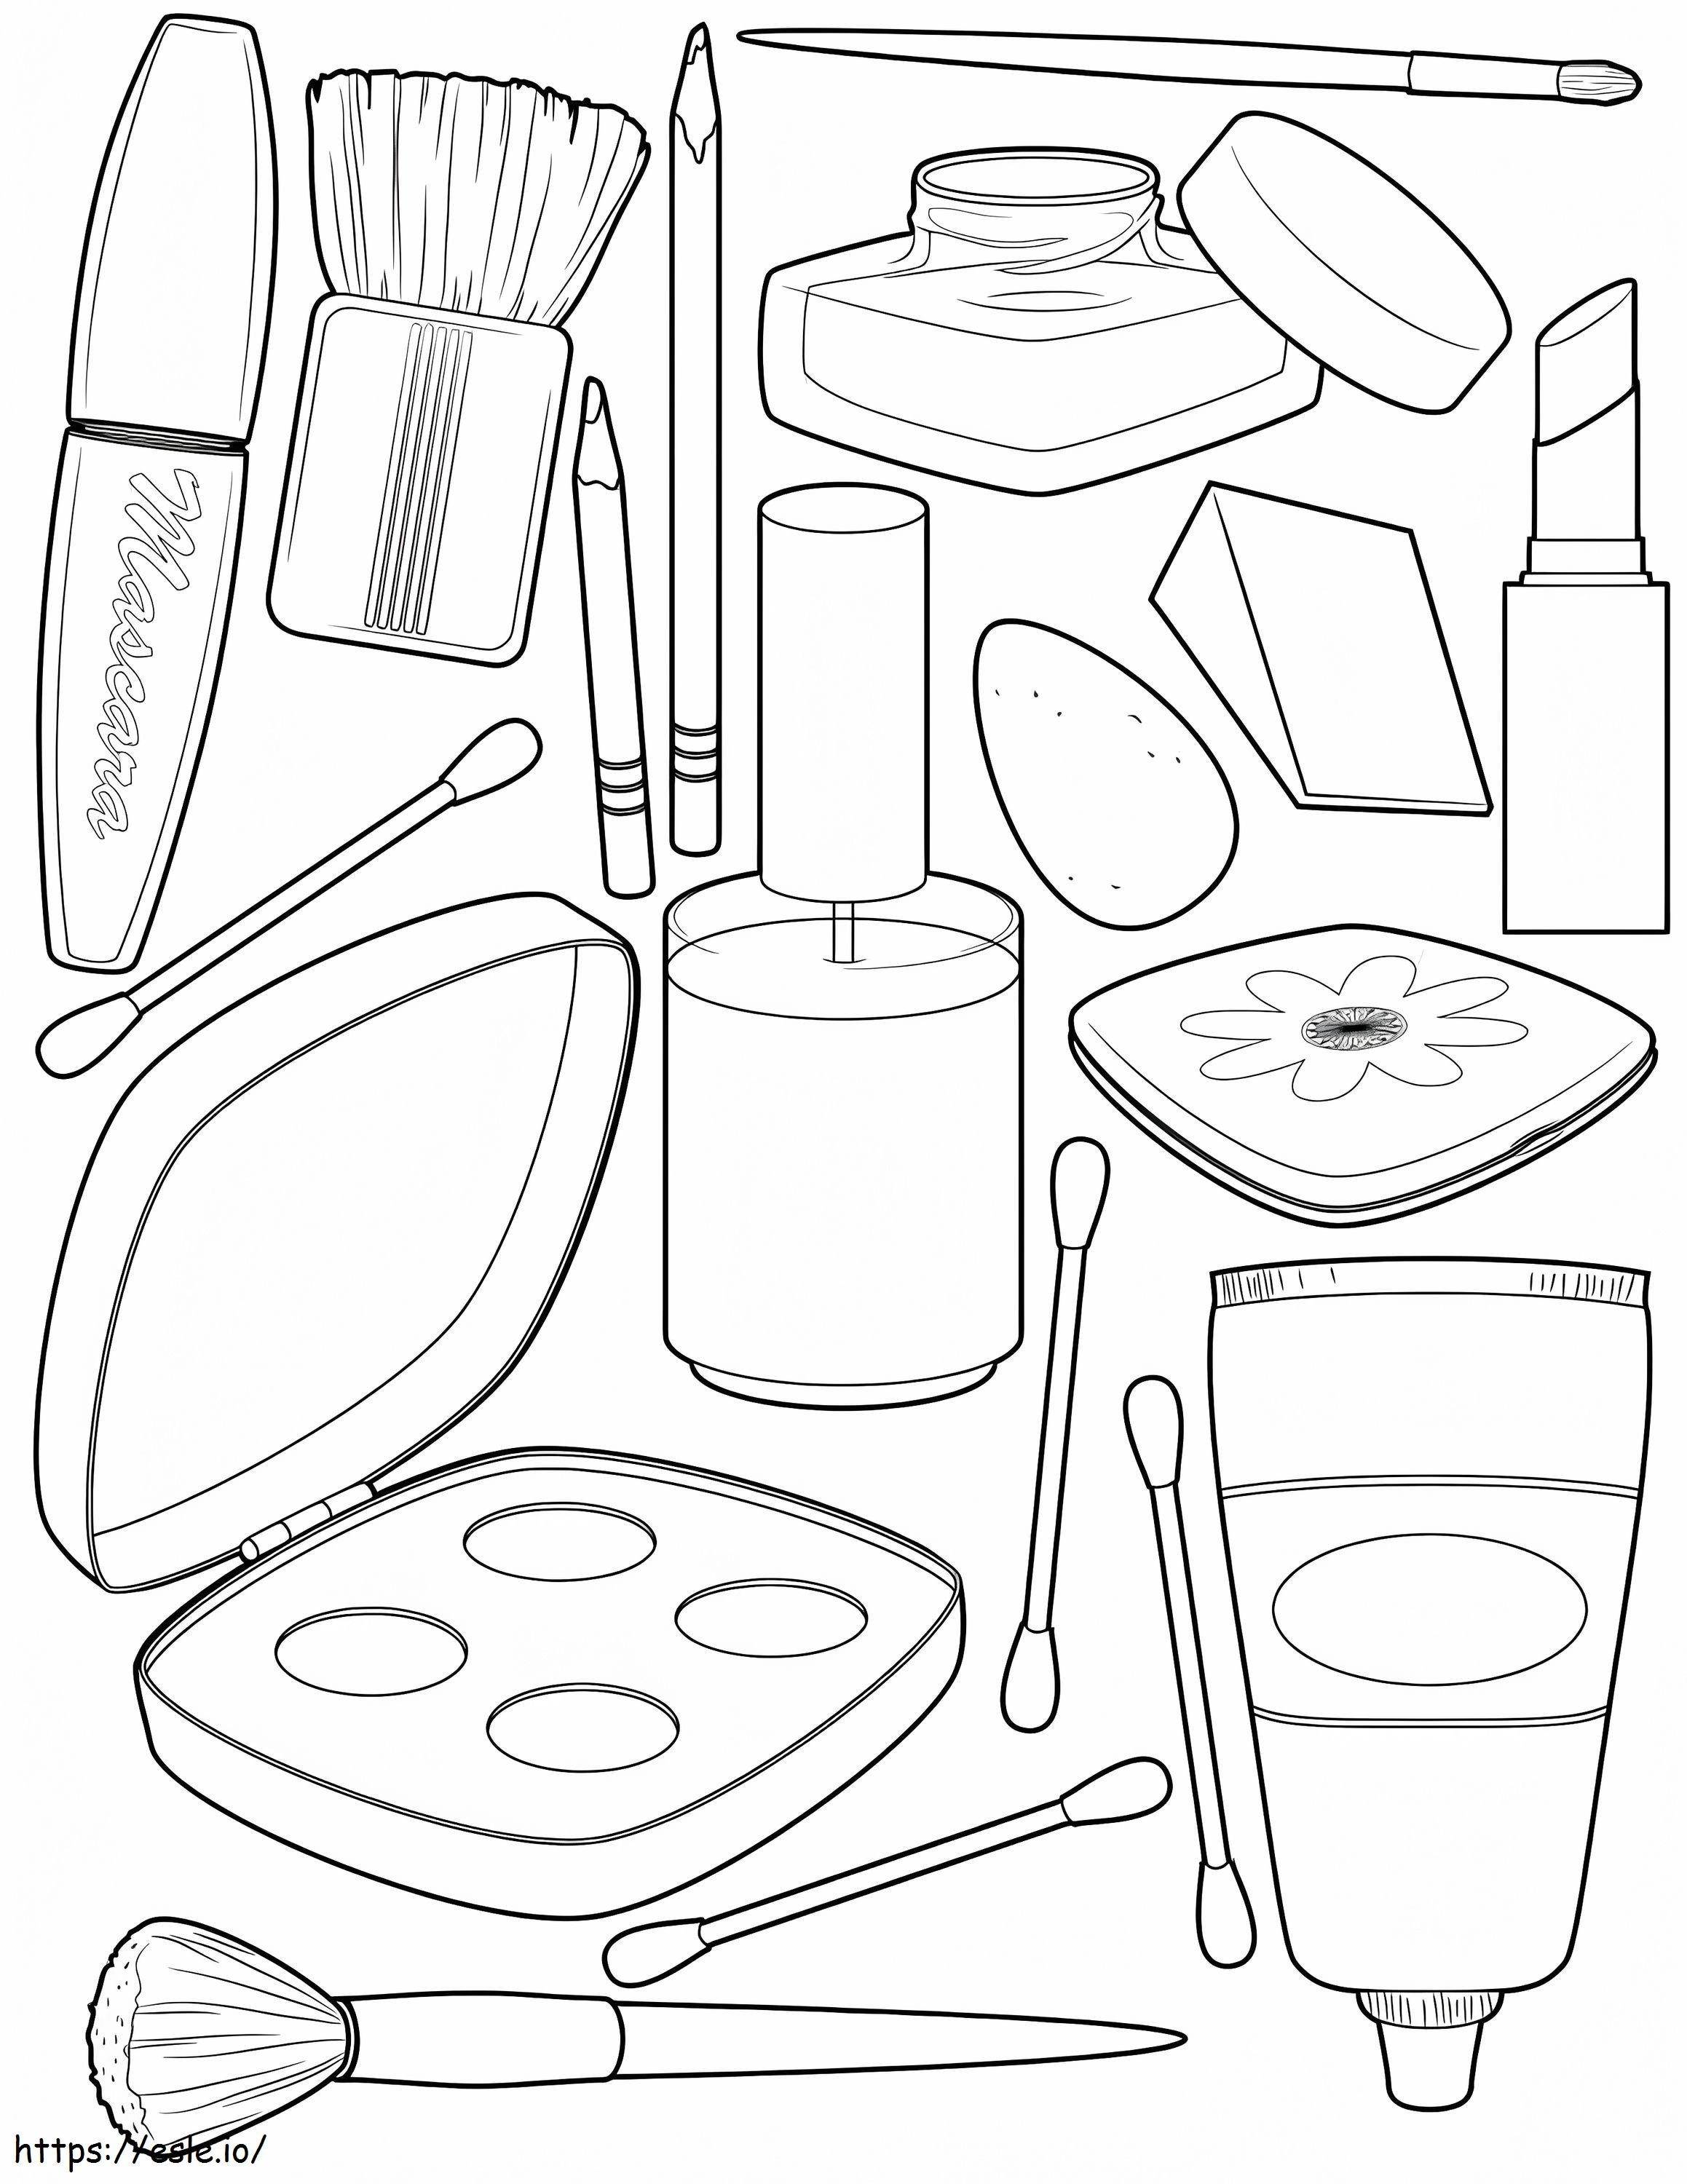 Kit de maquiagem para colorir